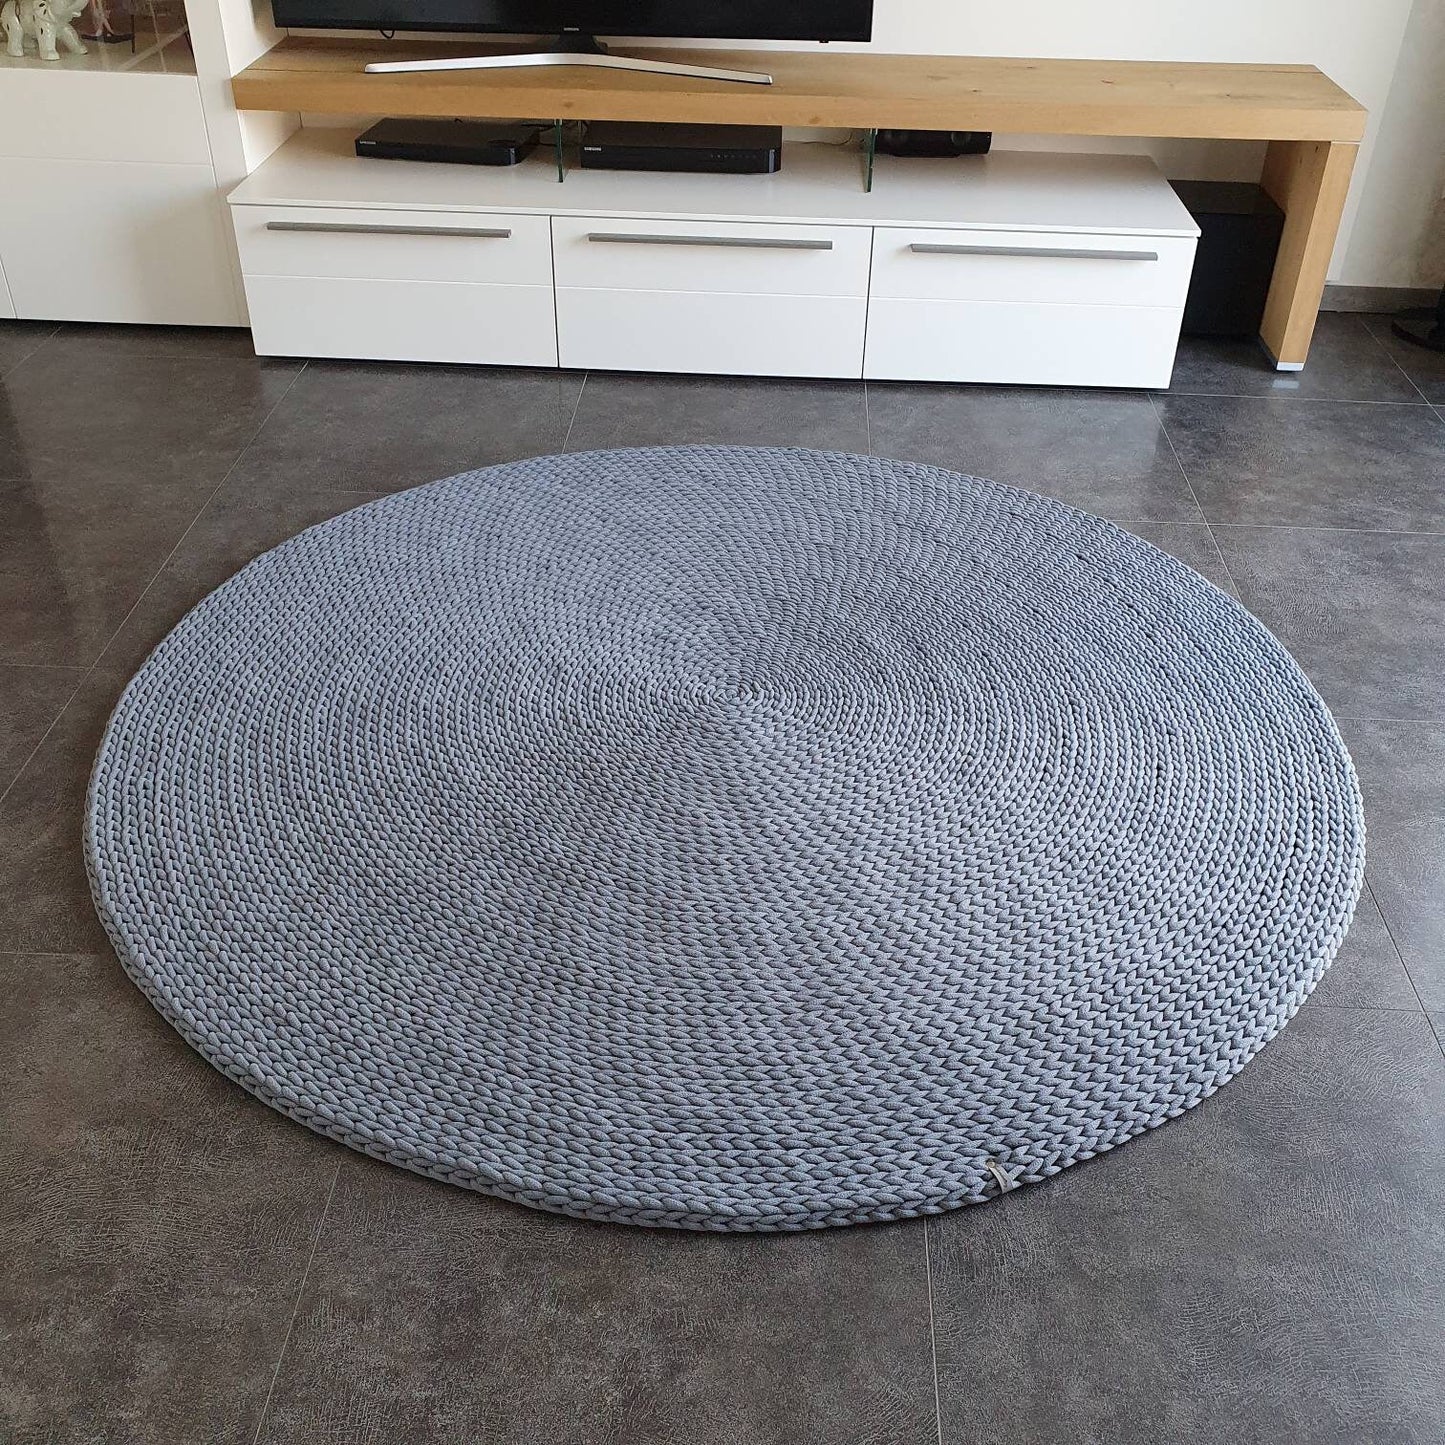 Handmade crocheted round rug with a Scandinavian look